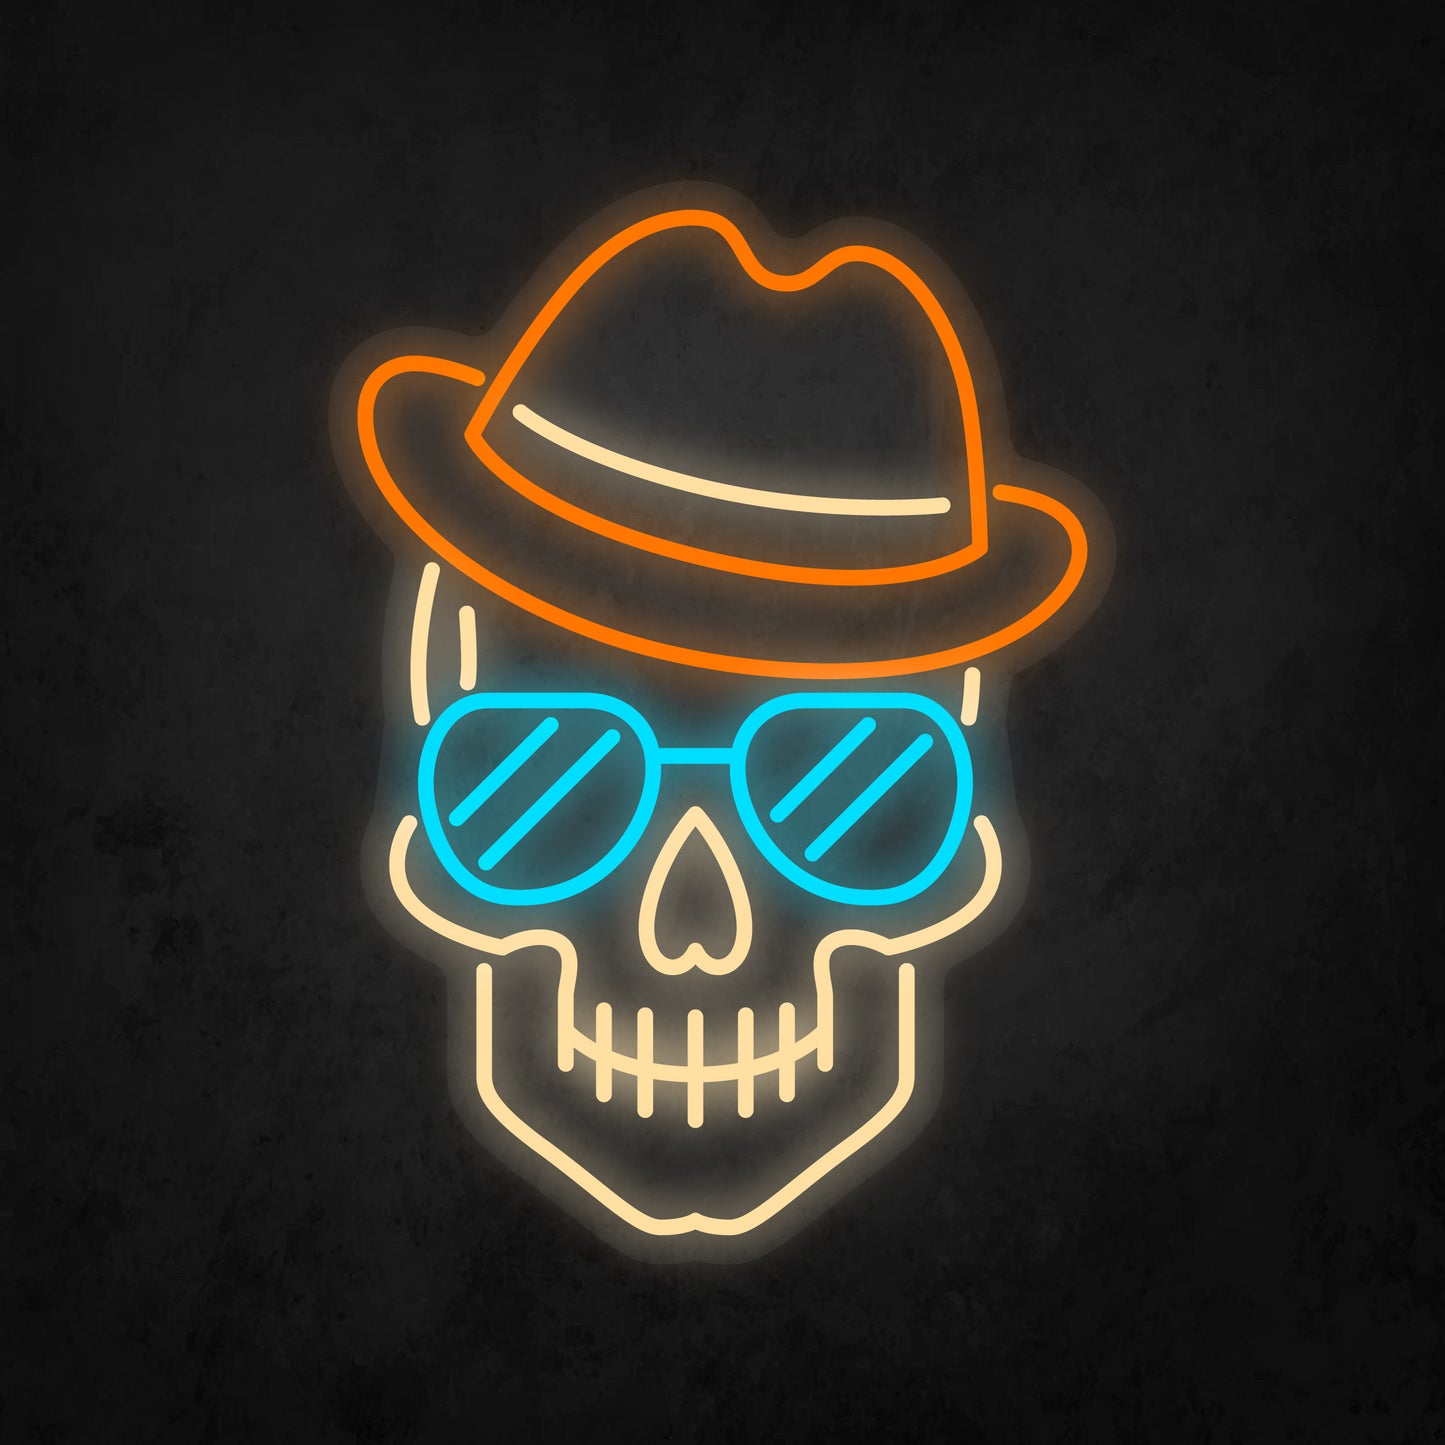 LED Neon Sign - Cool Skull Face